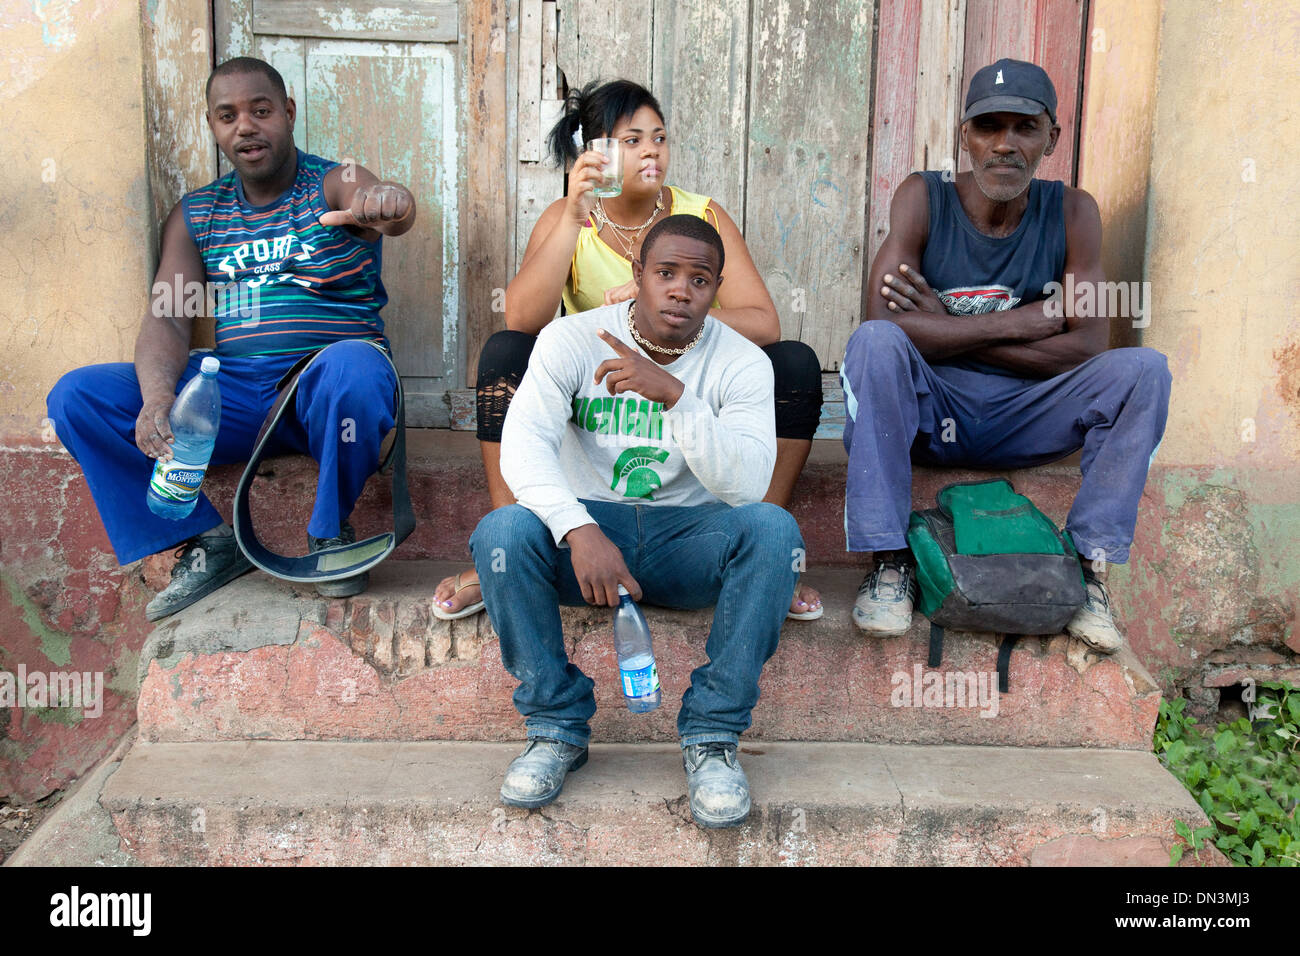 Trinidad, Cuba street scene avec les populations locales, Trinidad, Cuba, Caraïbes, Amérique Latine Banque D'Images